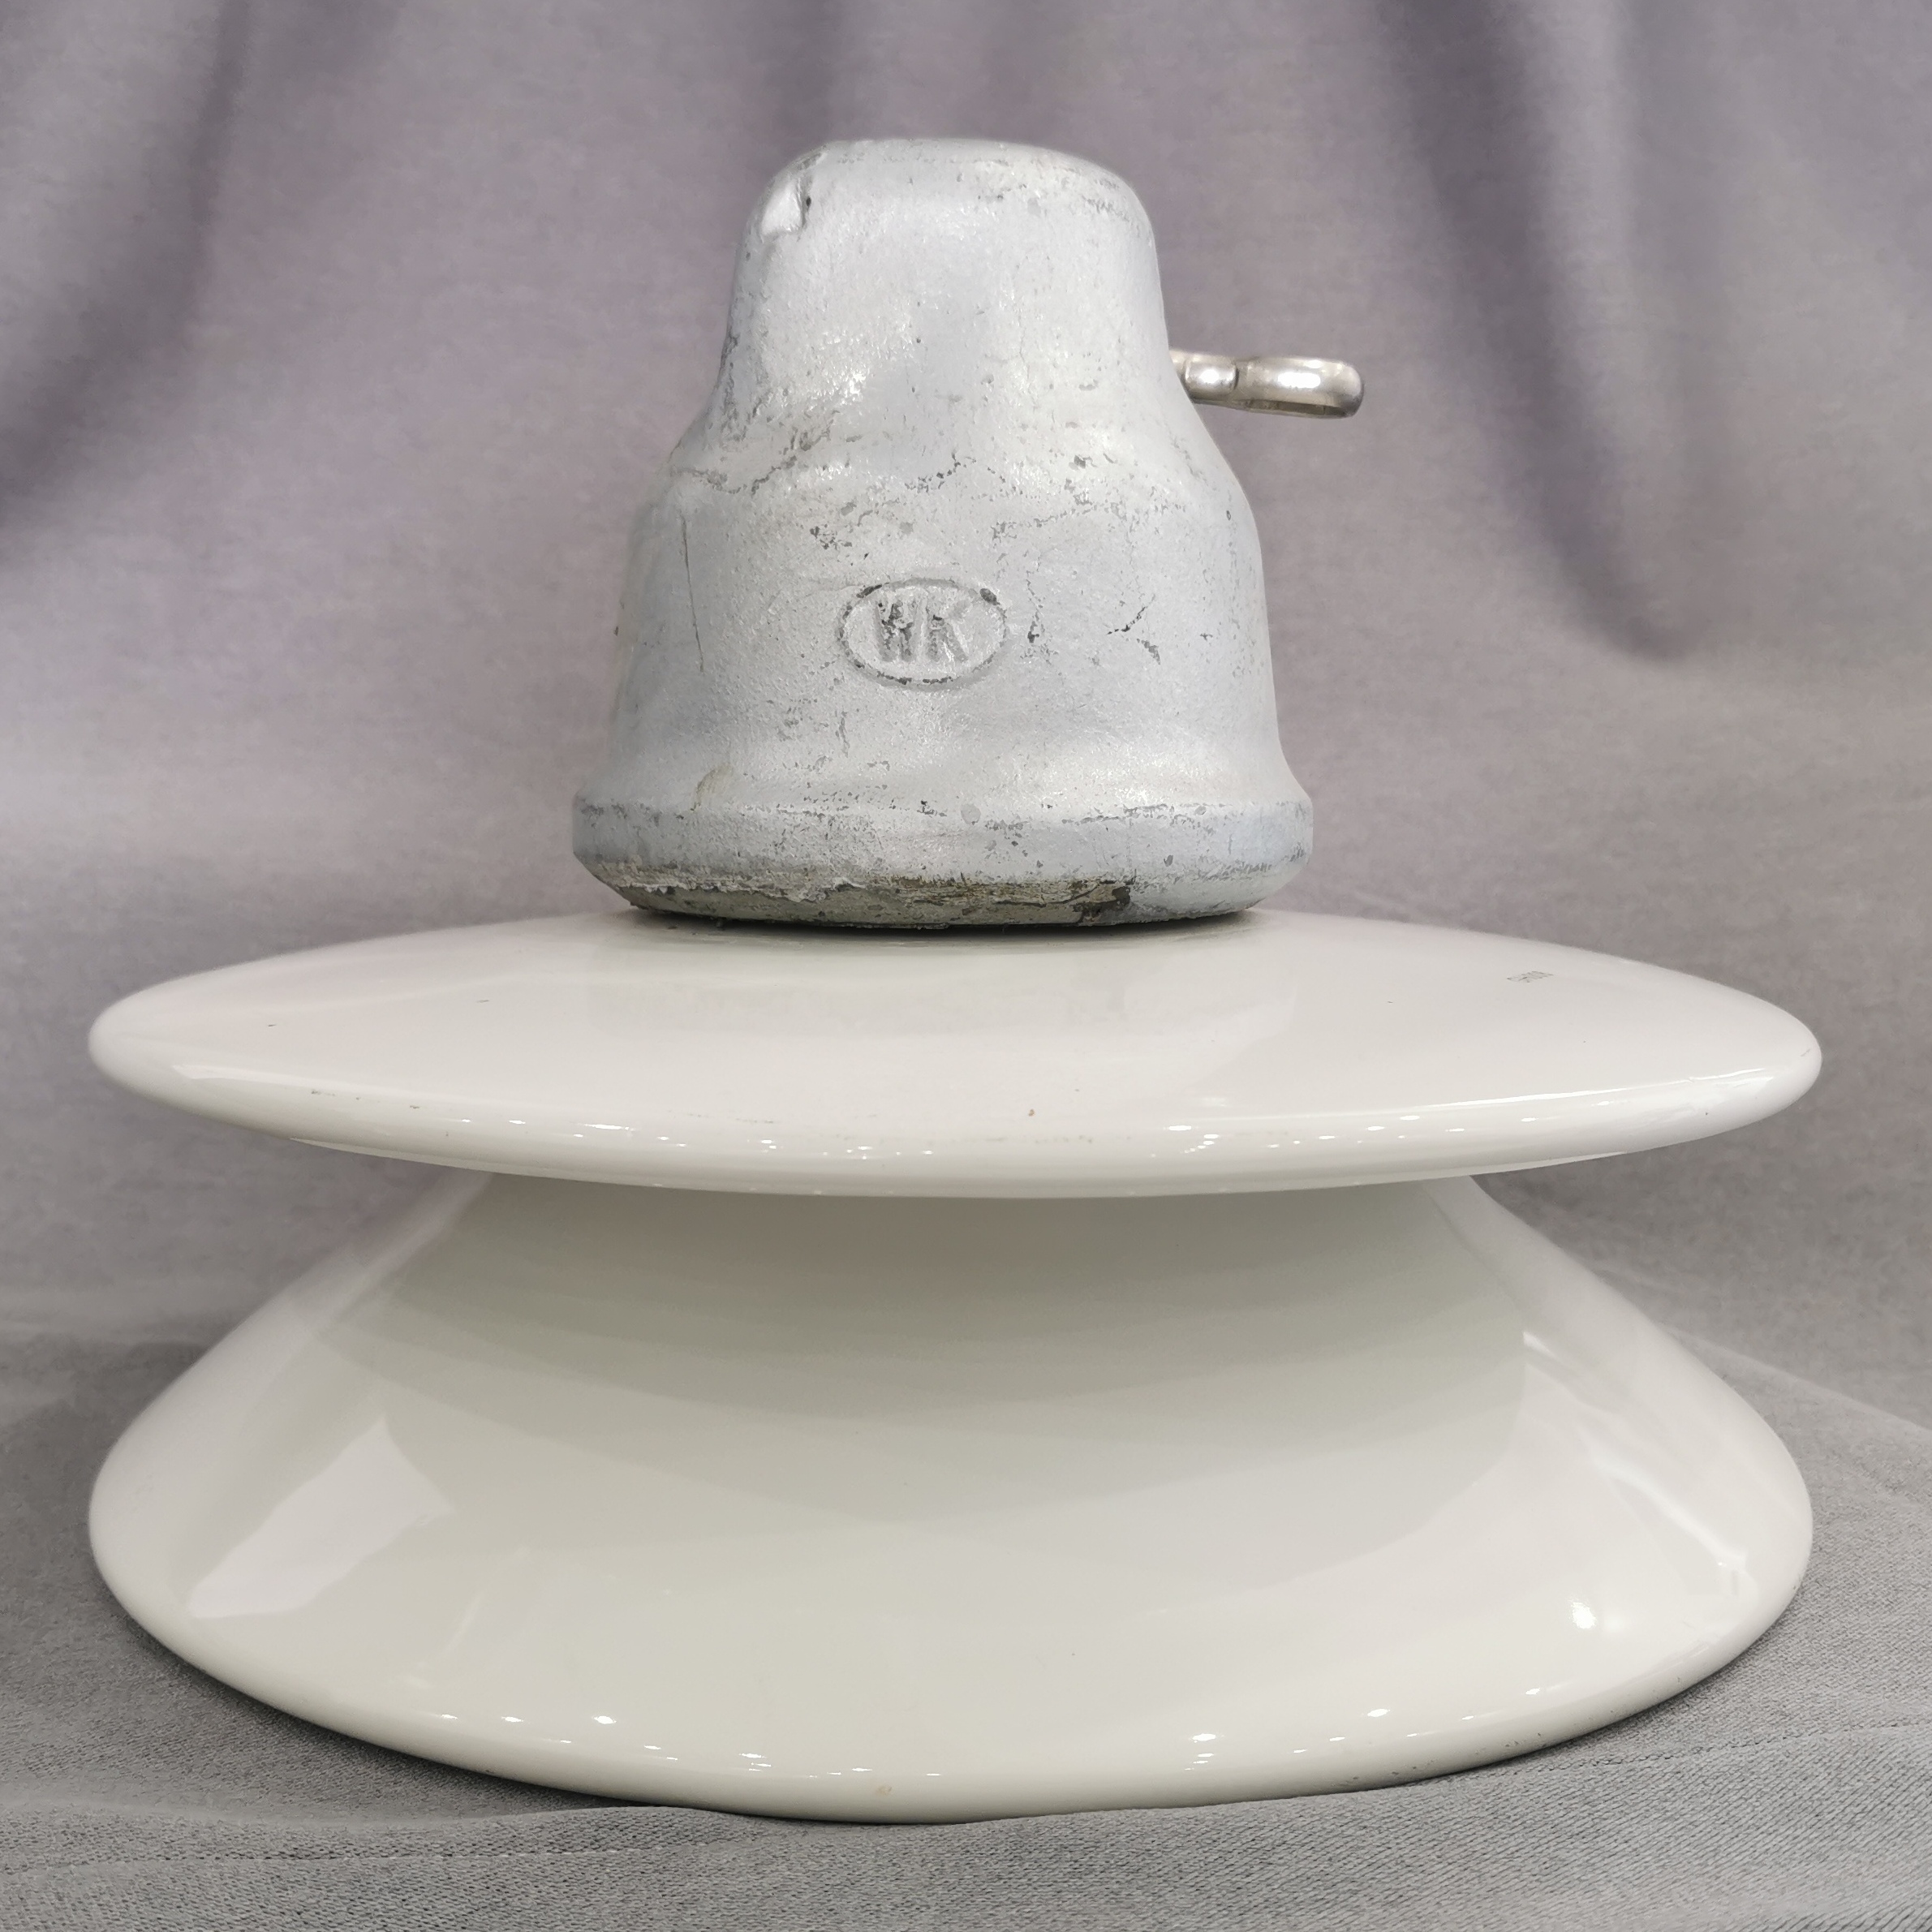 420 KN DC Disc kuyimitsidwa porcelain insulator